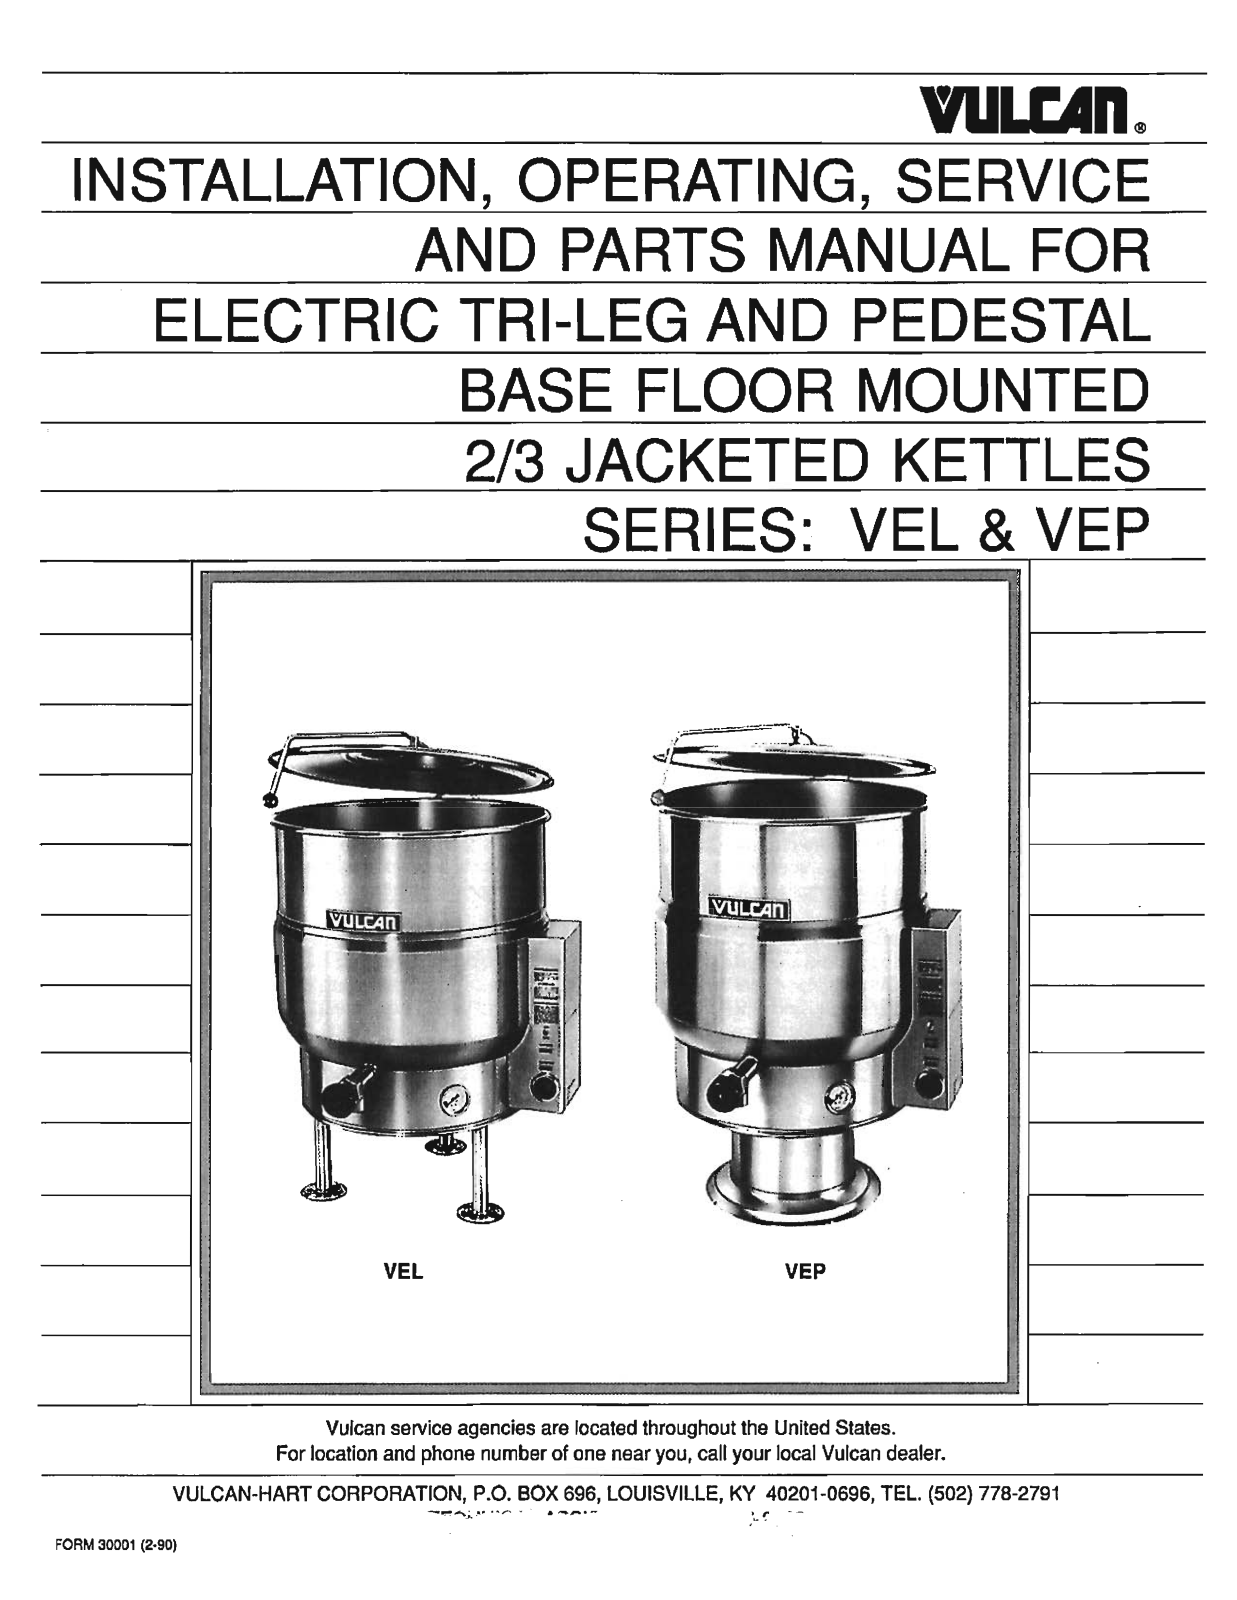 Vulcan Hart VEL Series, VEP Series Service Manual